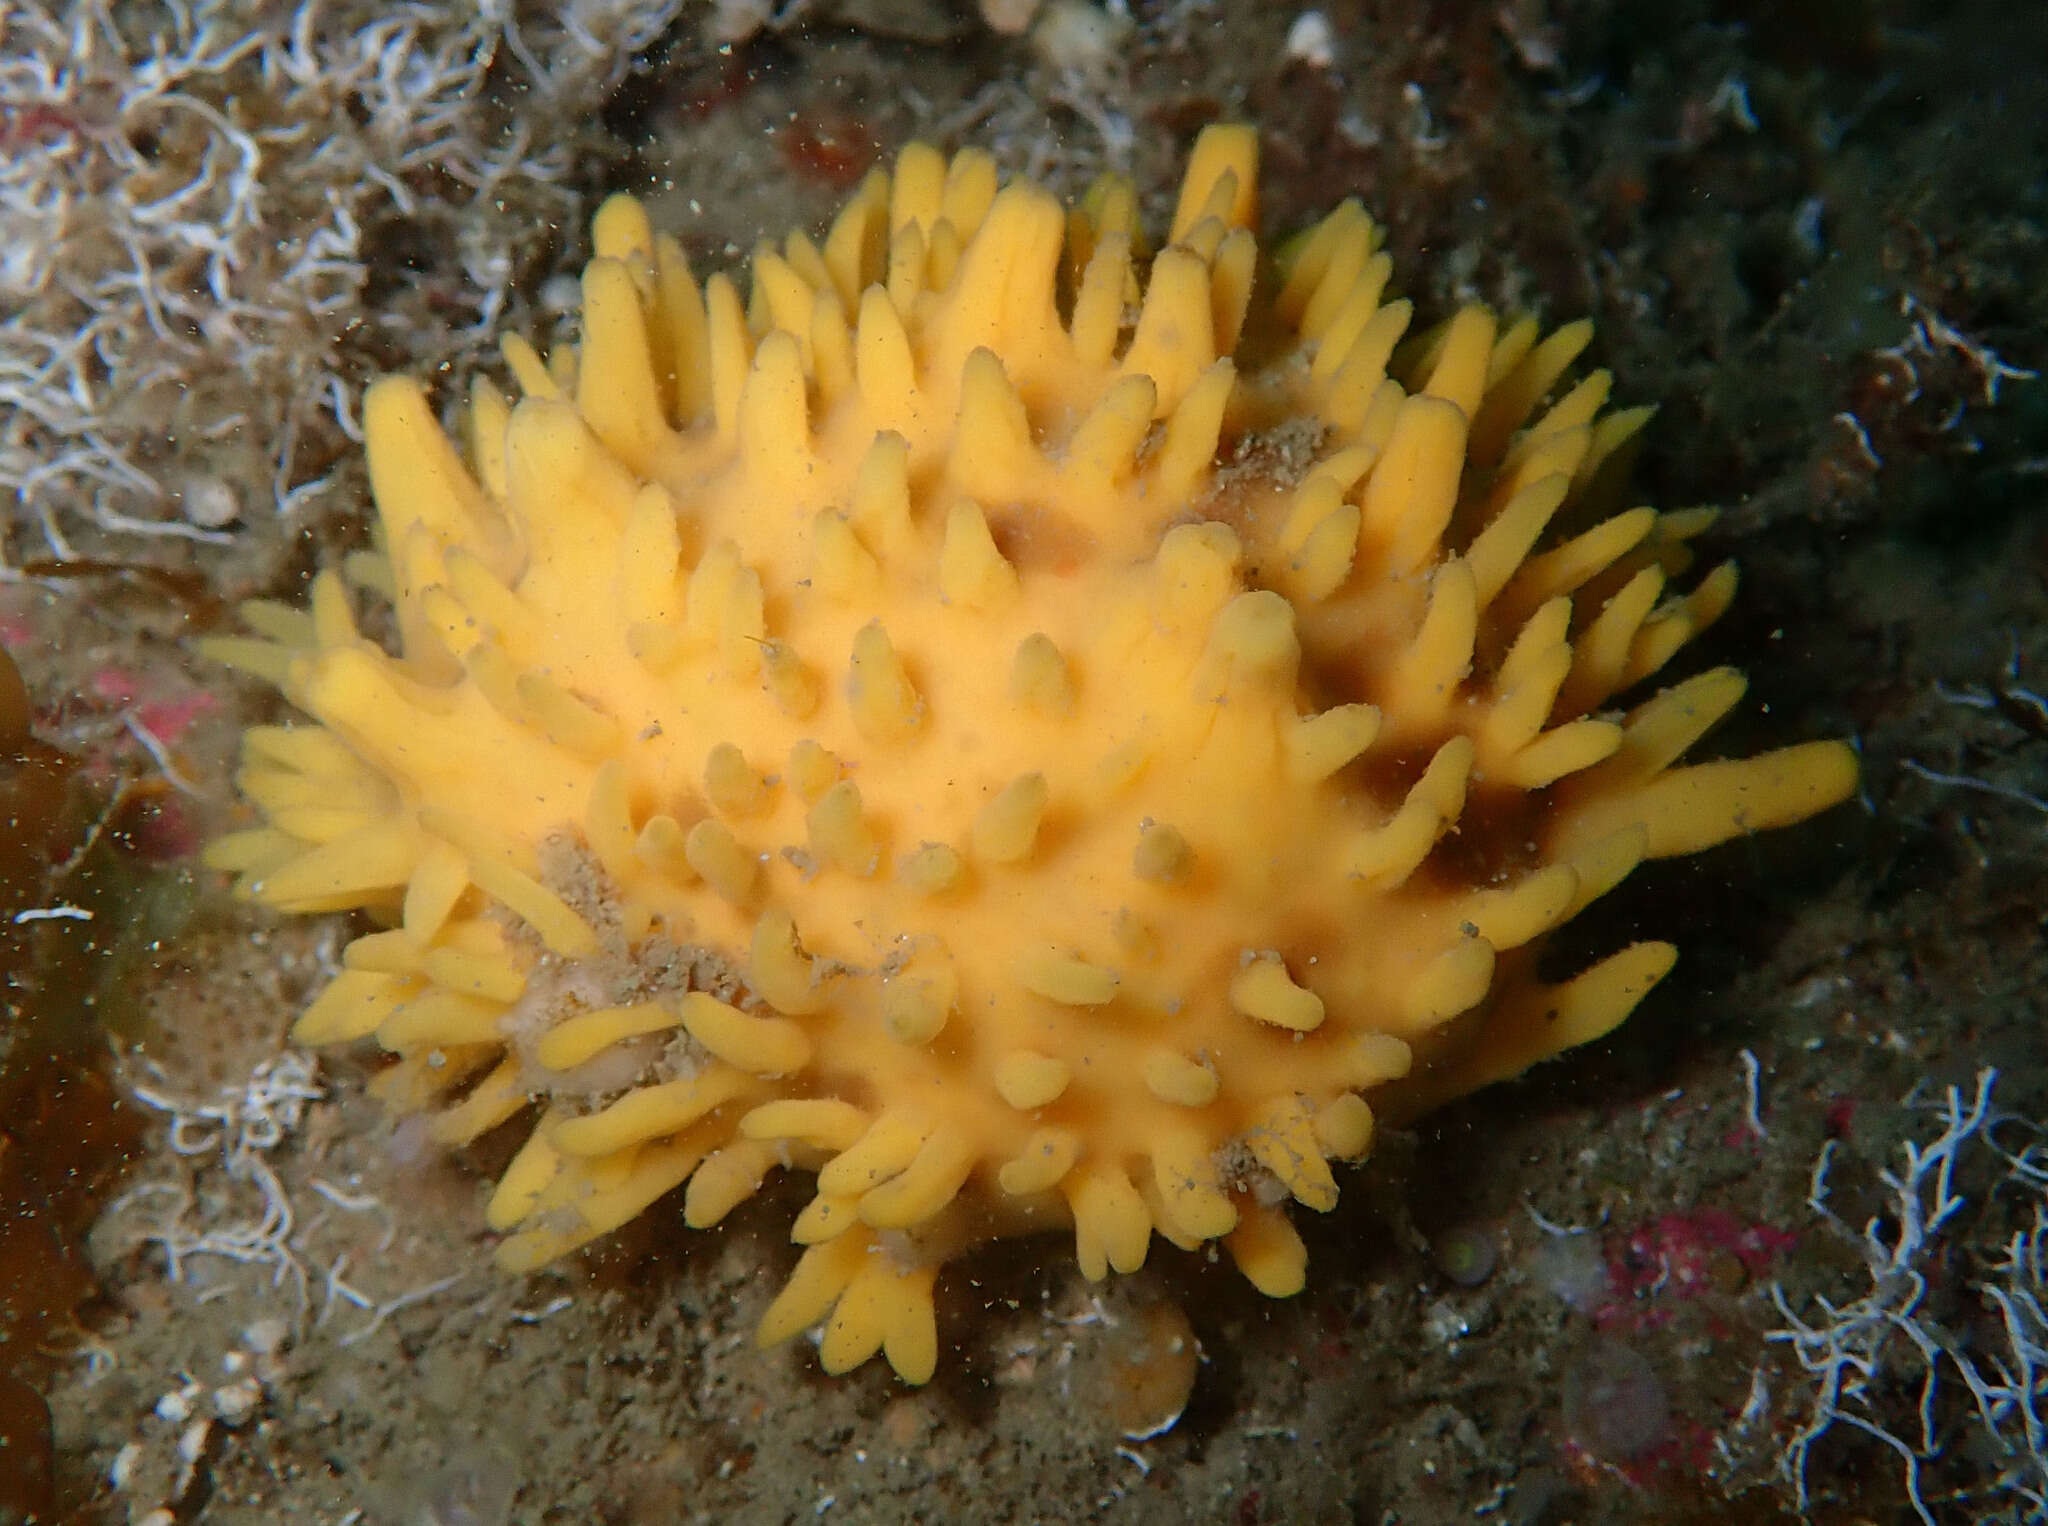 Image of massive horny sponge